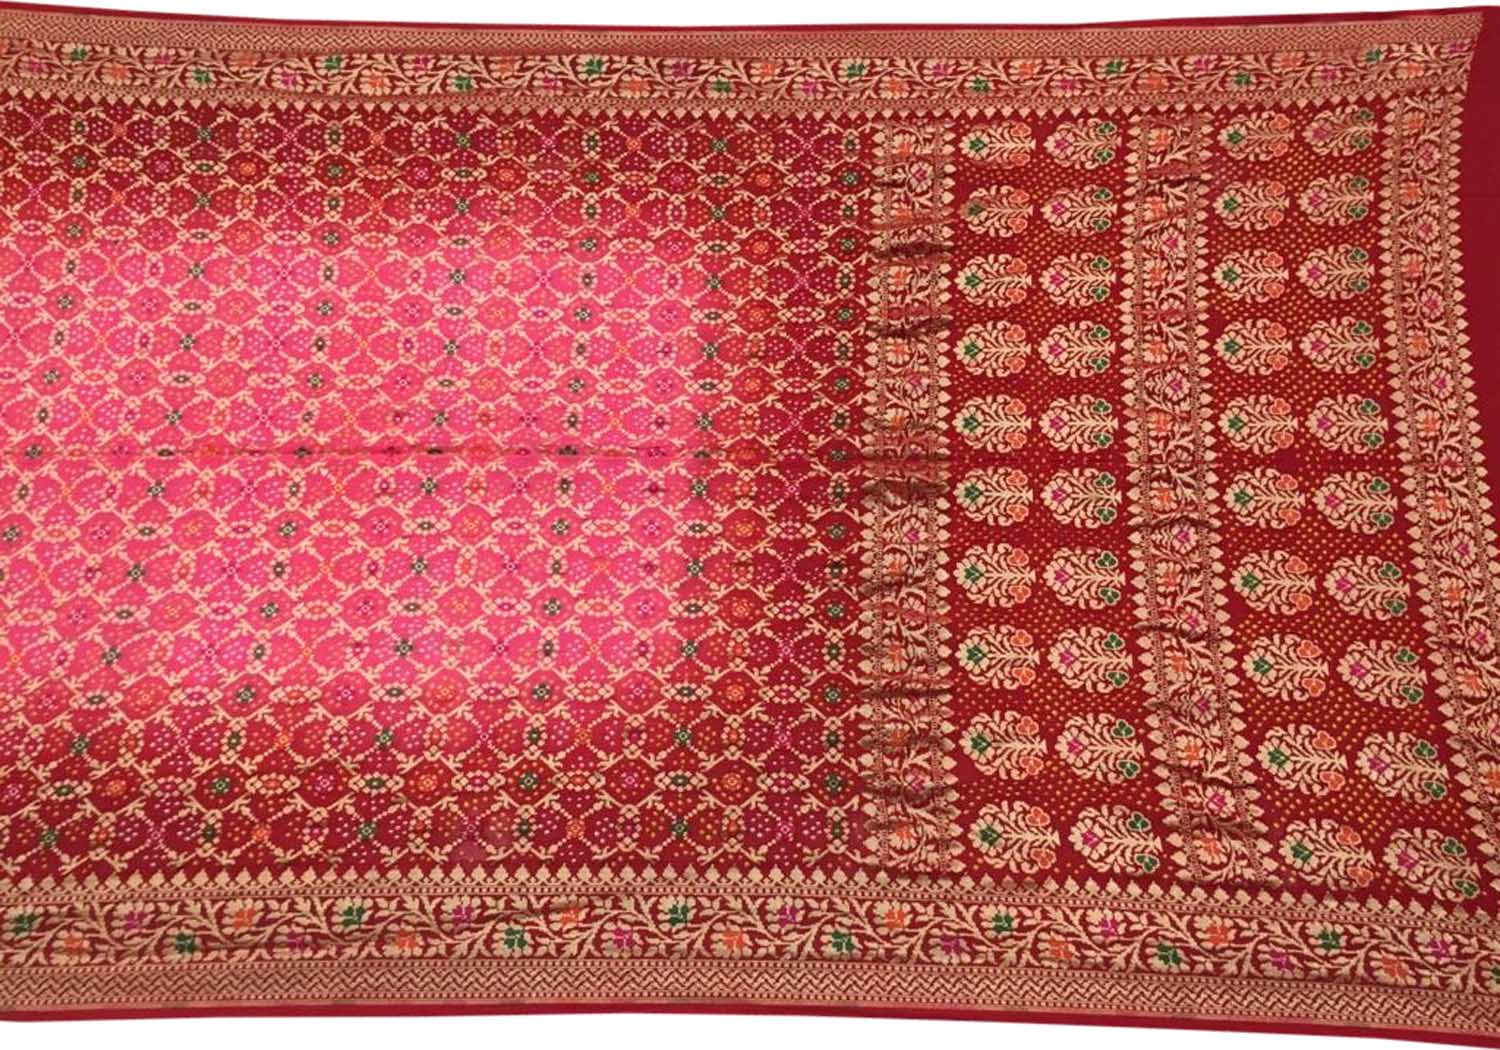 Stunning Pink & Red Banarasi Bandhani Georgette Saree: A Timeless Classic - Luxurion World